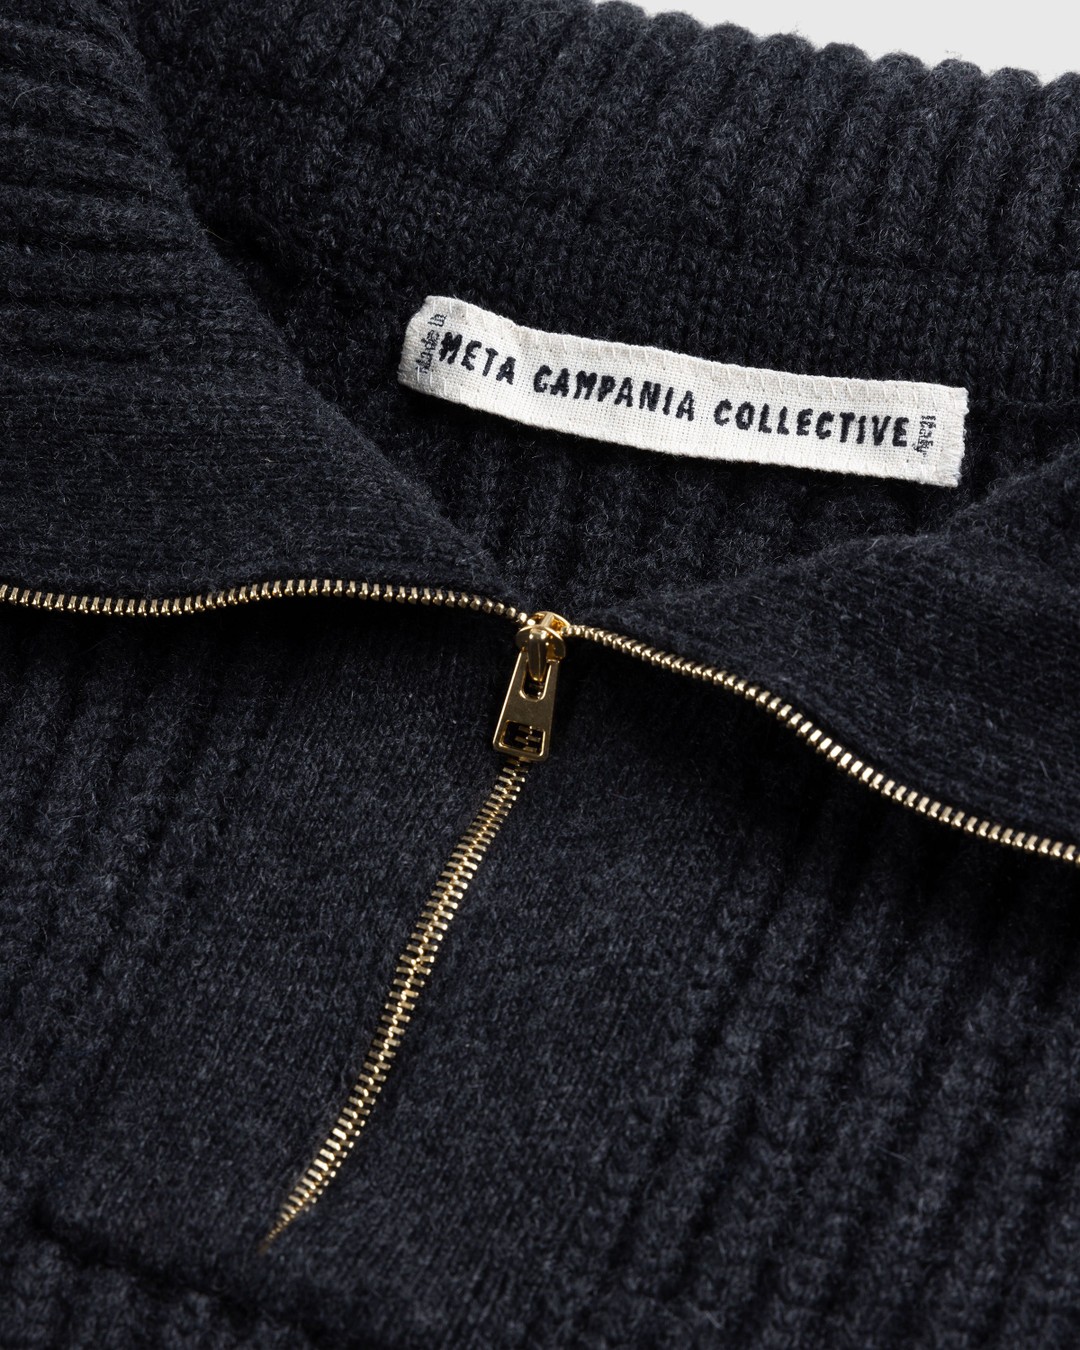 Meta Campania Collective – Michel Exaggerated Rib Cashmere Half Zip Weimaraner Grey - Knitwear - Grey - Image 7